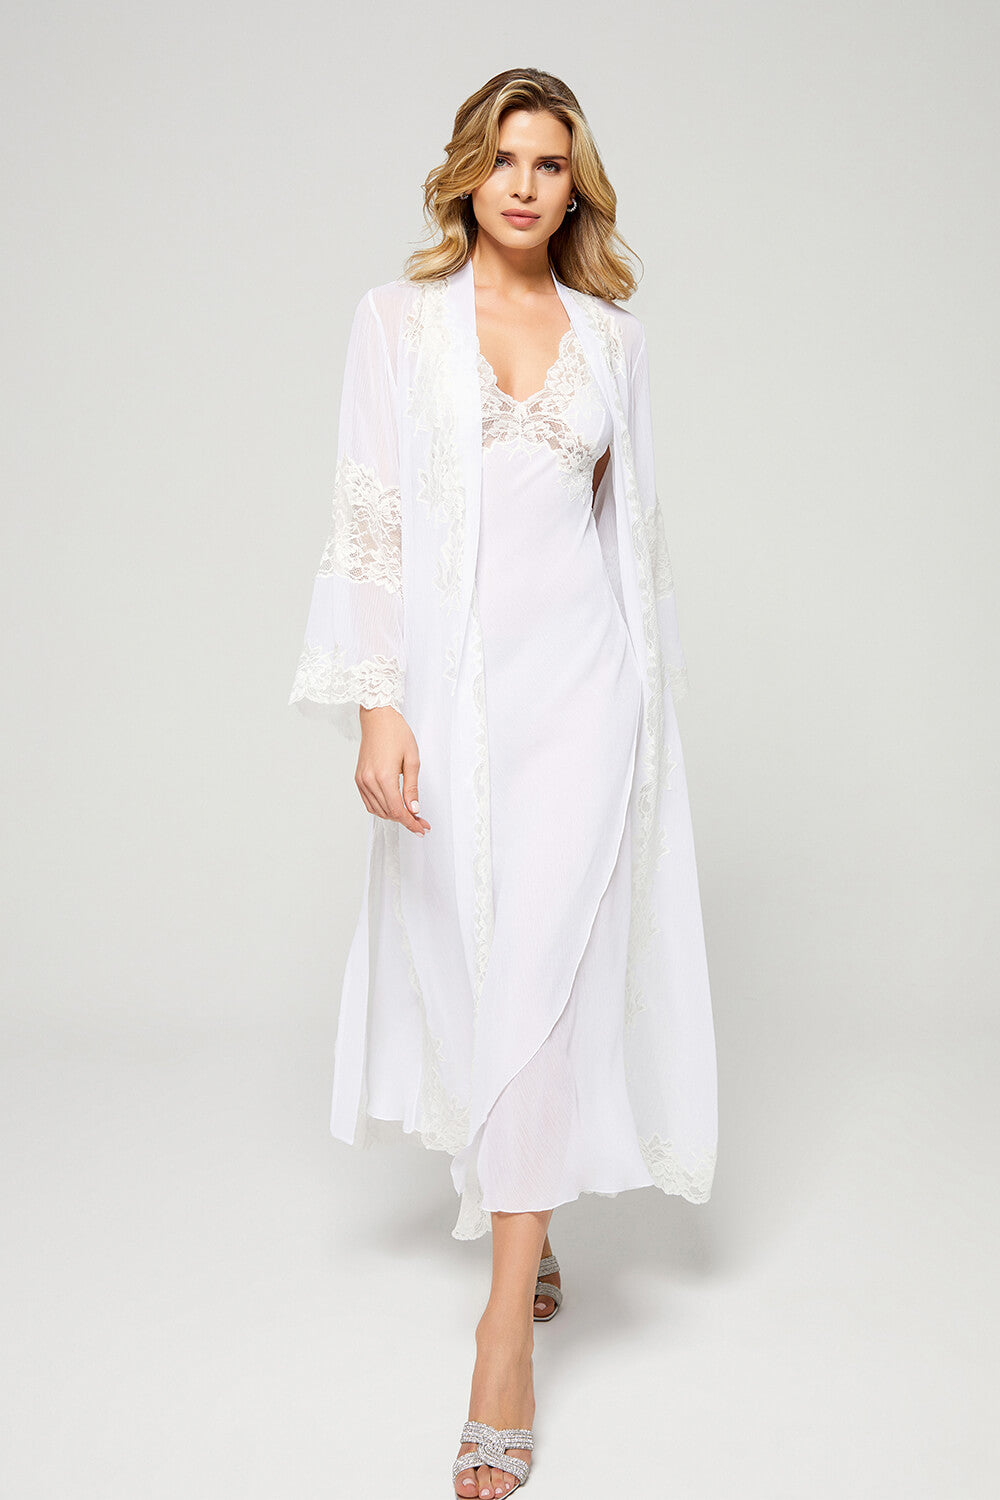 Lois - Long Silk Chiffon Robe Set - White on White